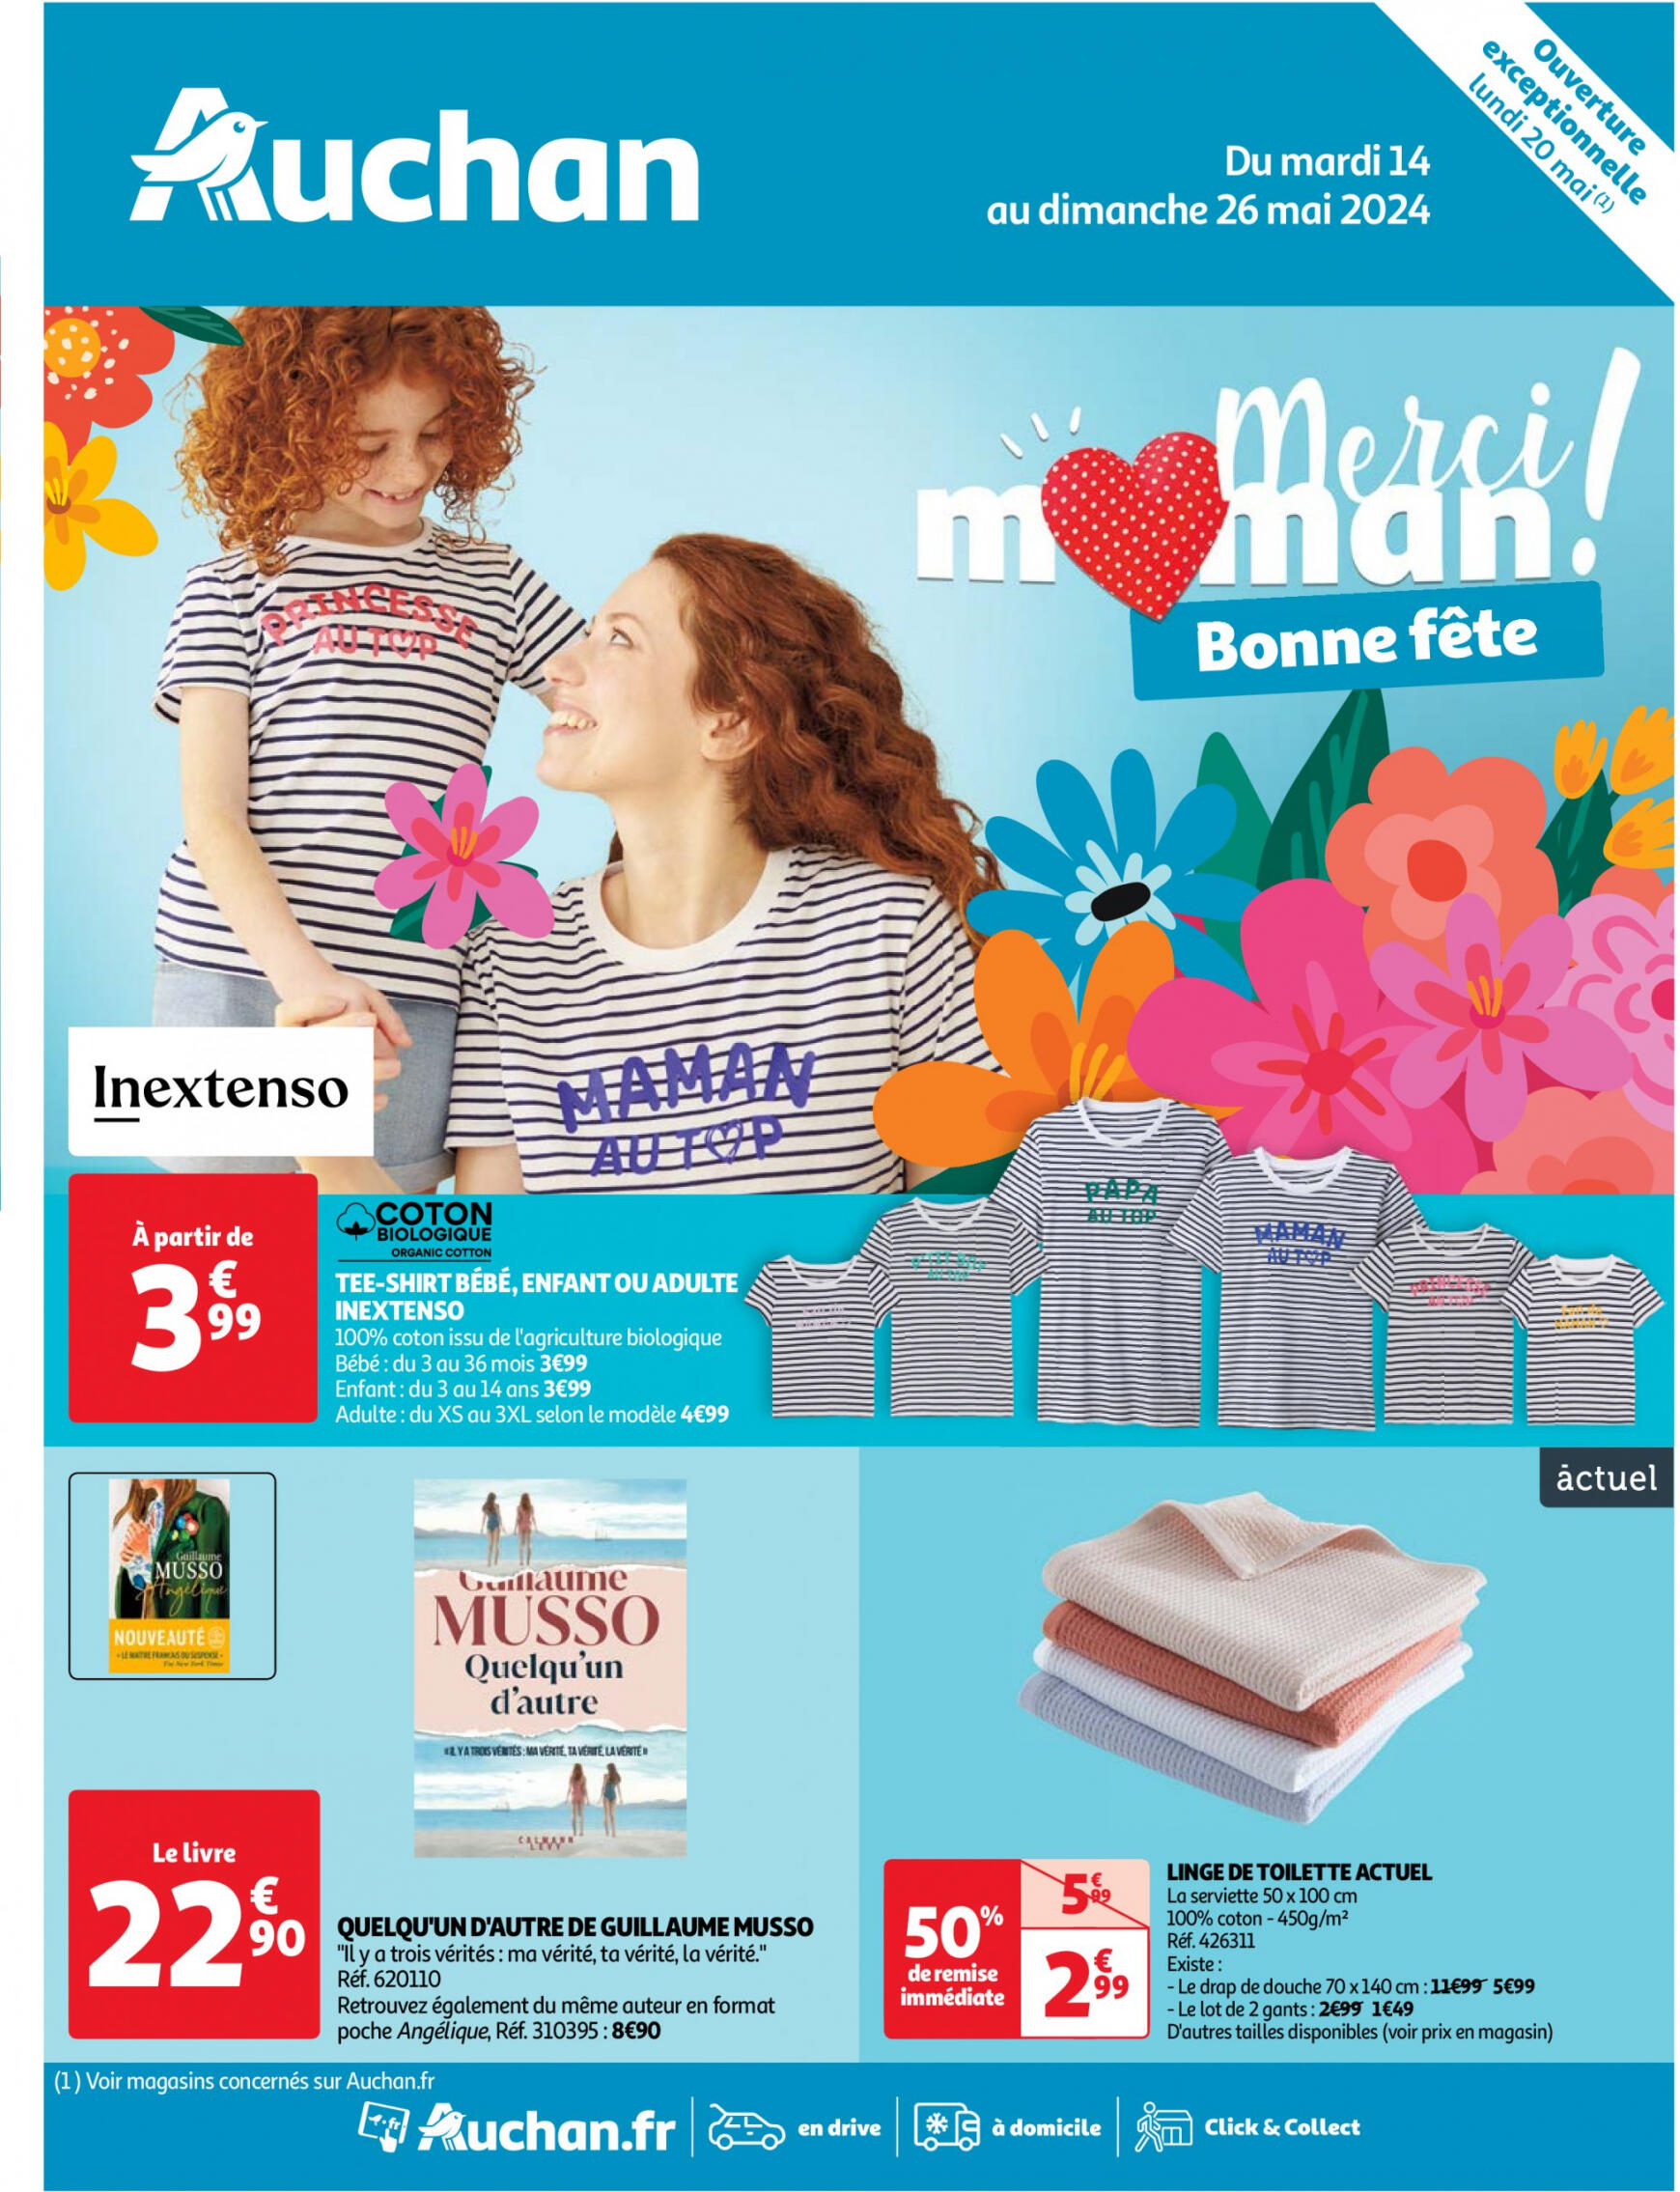 auchan - Auchan - Merci maman folder huidig 14.05. - 26.05. - page: 1